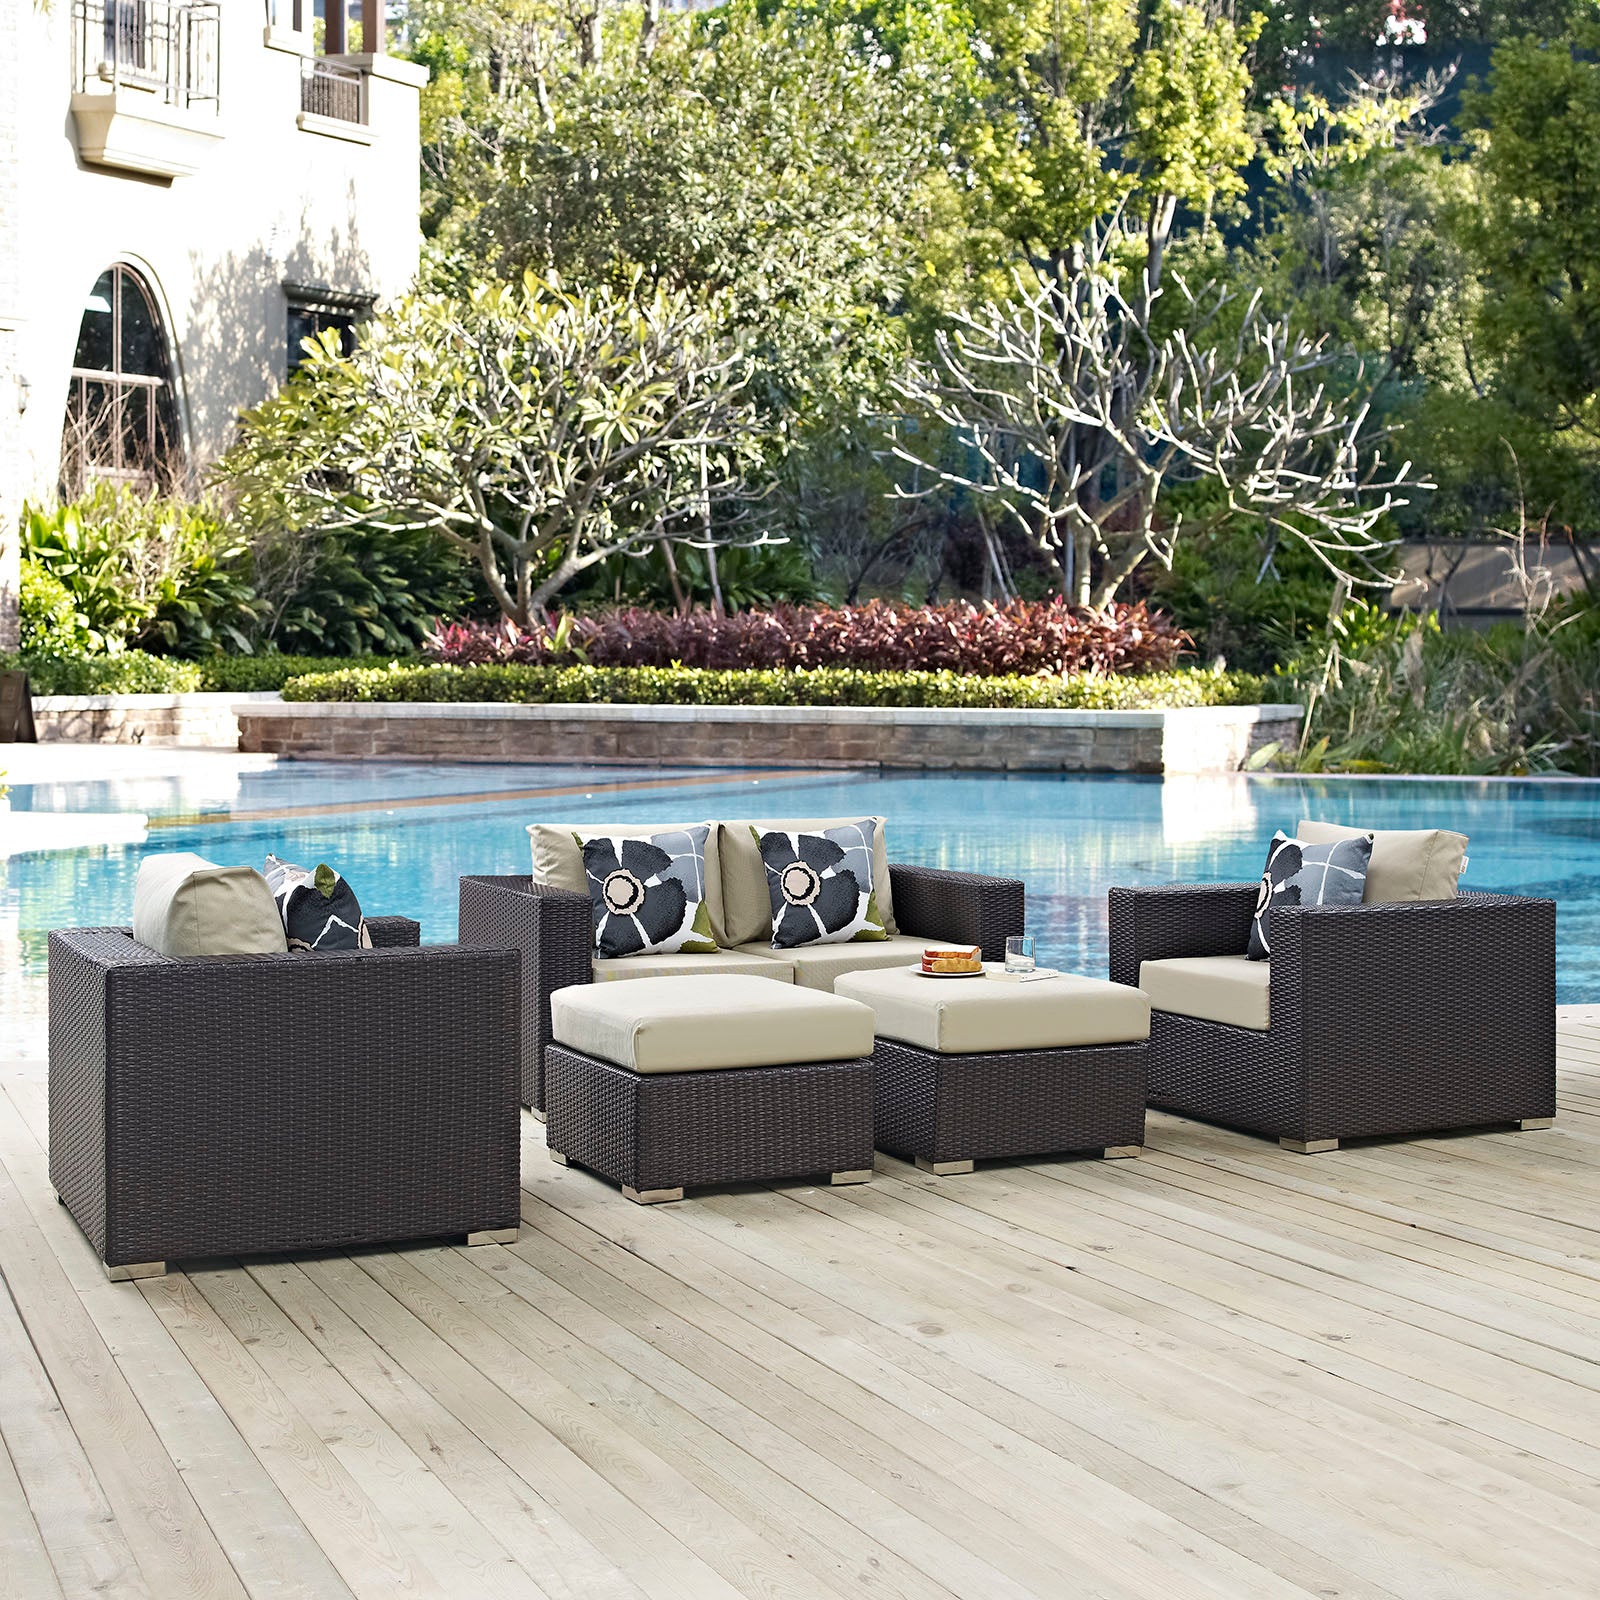 Convene 5 Piece Outdoor Patio Sofa Set - East Shore Modern Home Furnishings